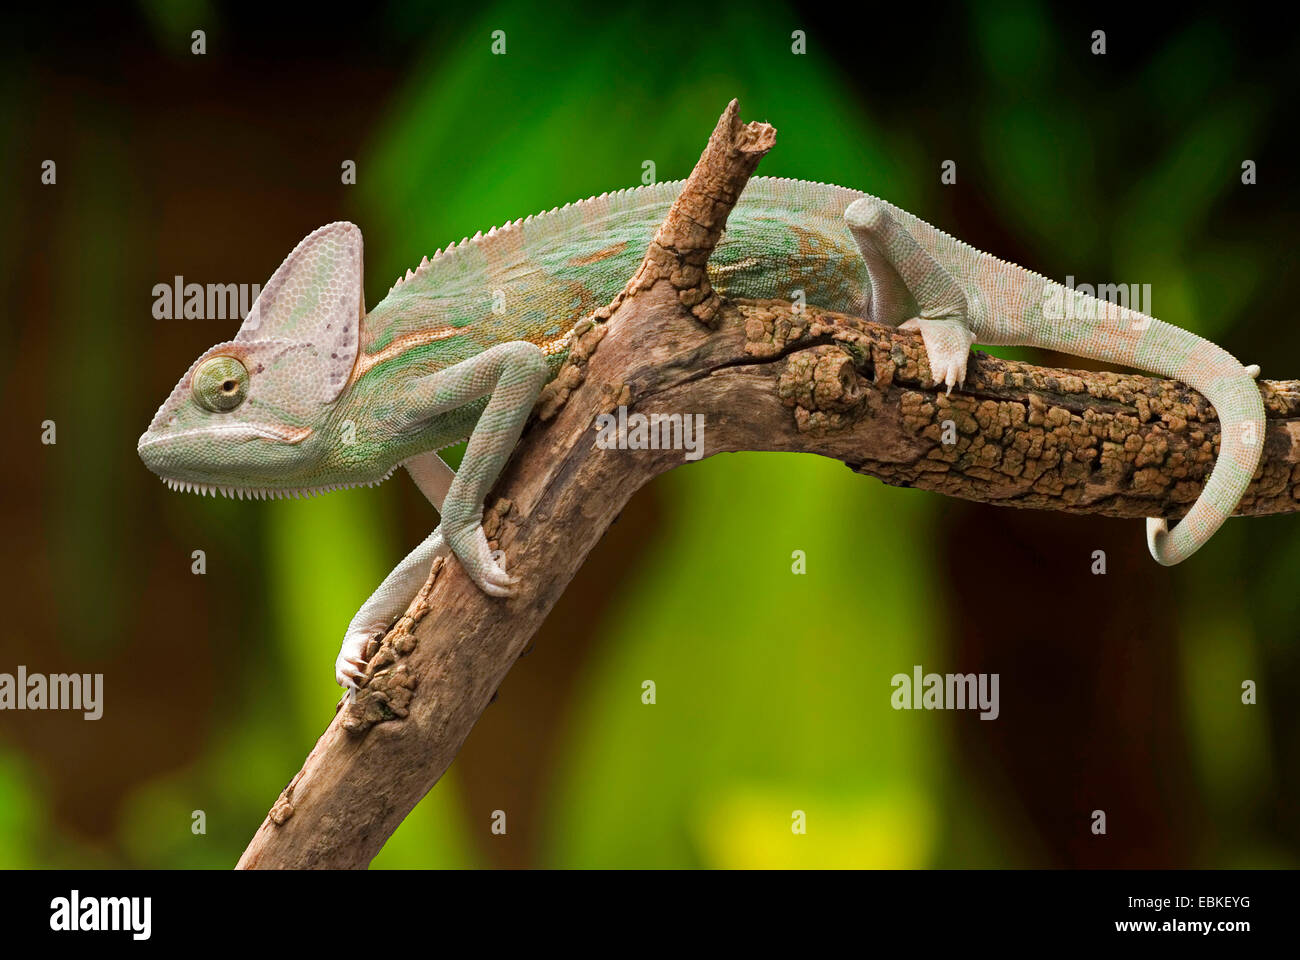 Yemen chameleon, cone-headed chameleon, veiled chameleon (Chamaeleo calyptratus), sitting on a twig Stock Photo